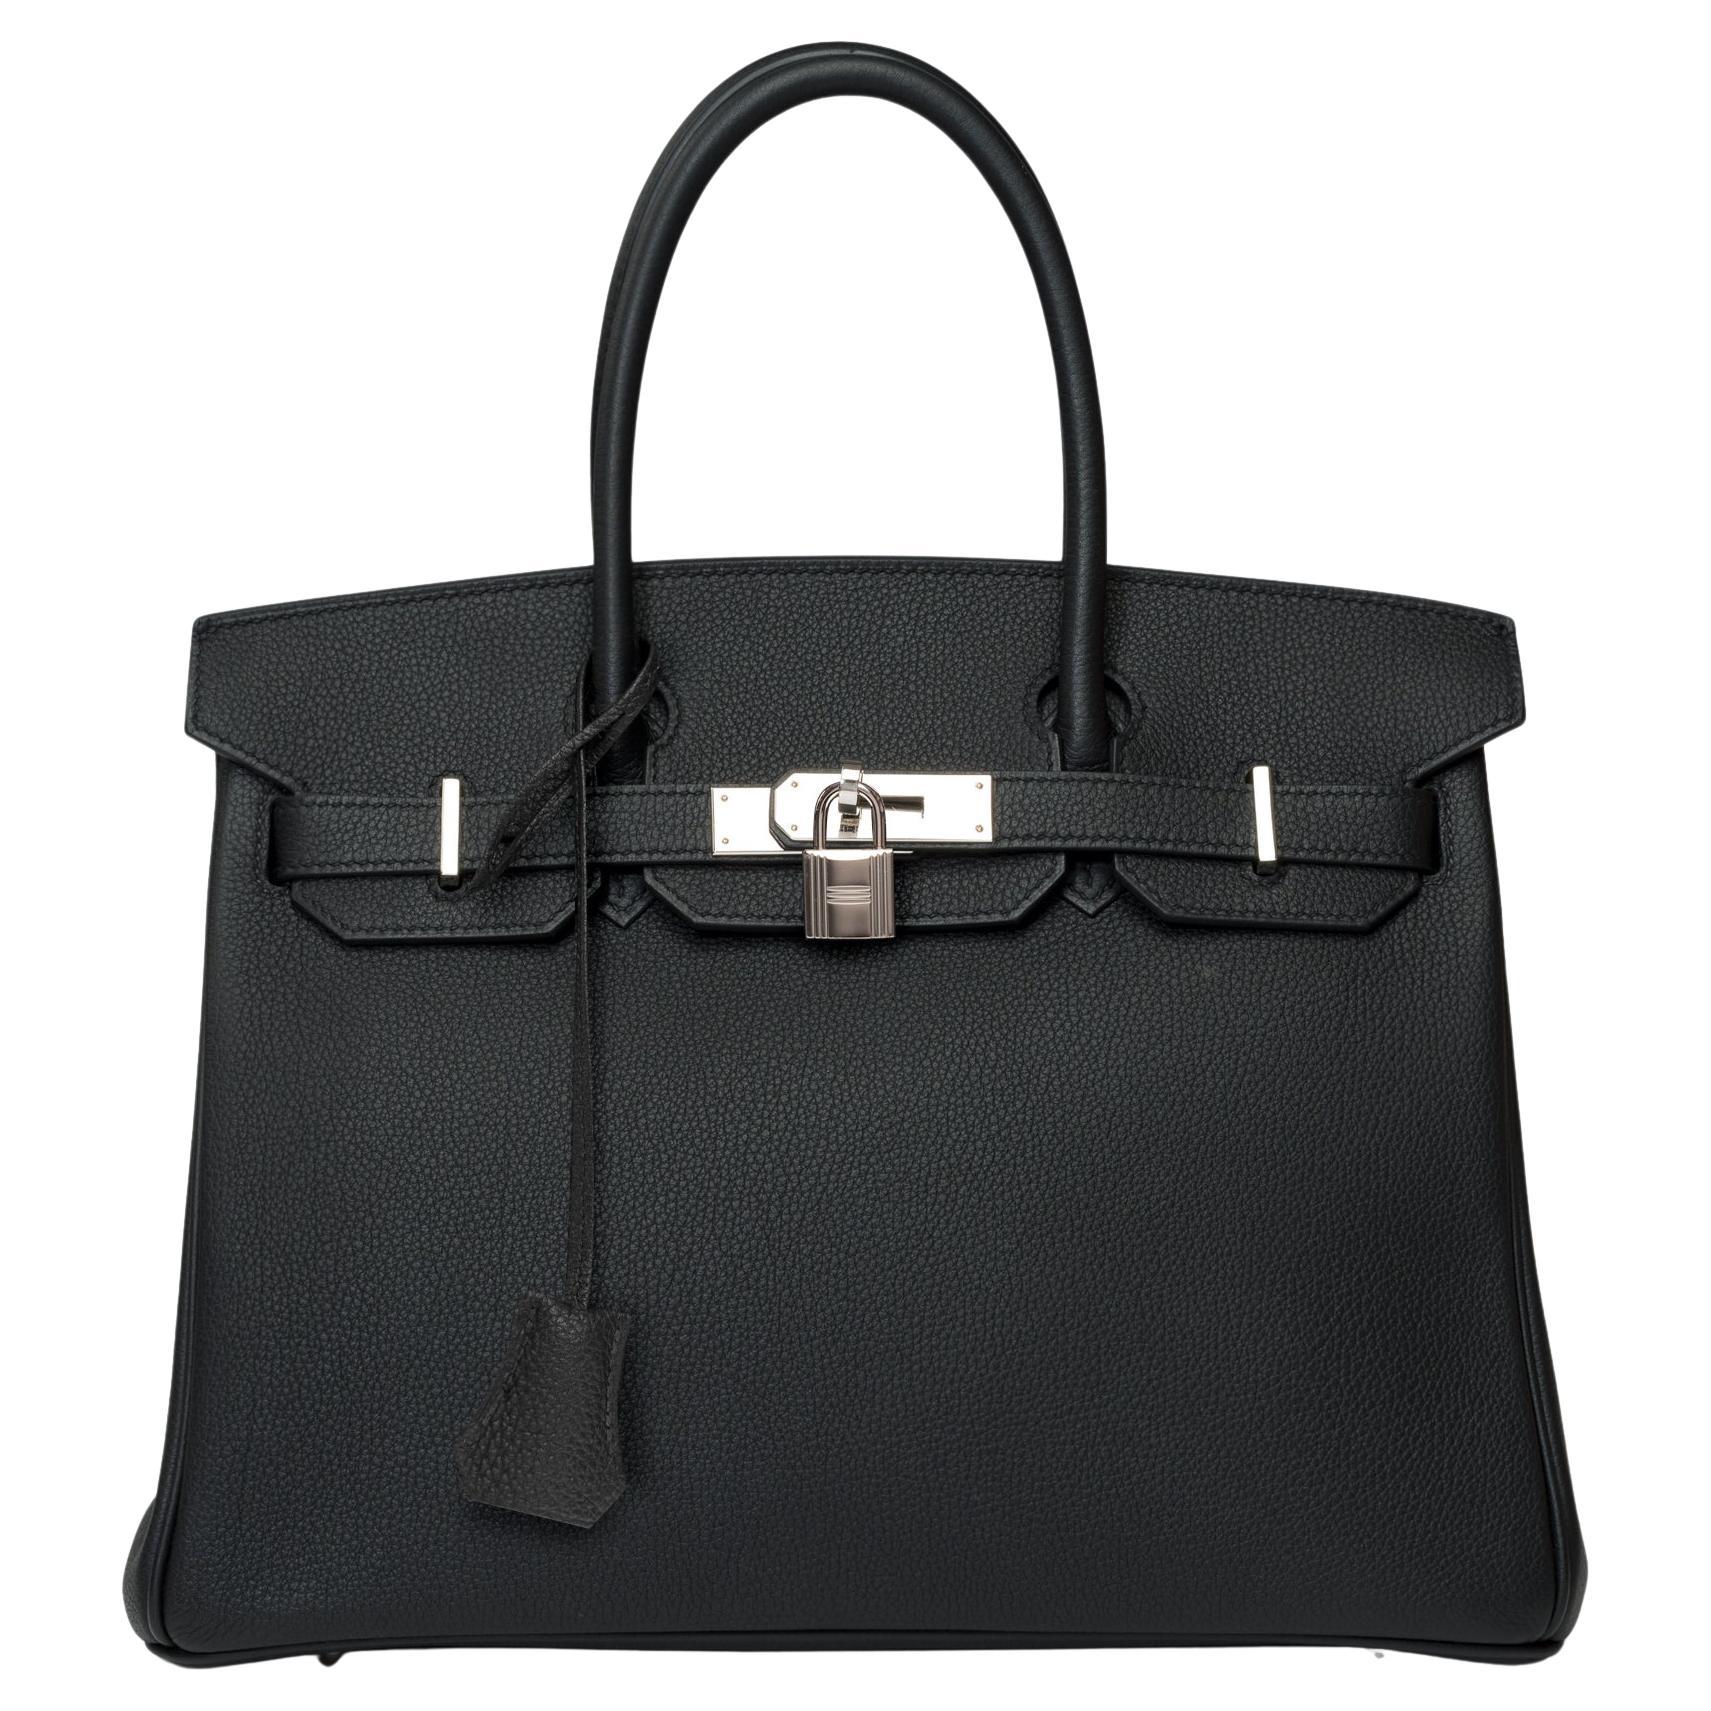 Splendid Hermes Birkin 30 handbag in Black Togo leather, SHW For Sale